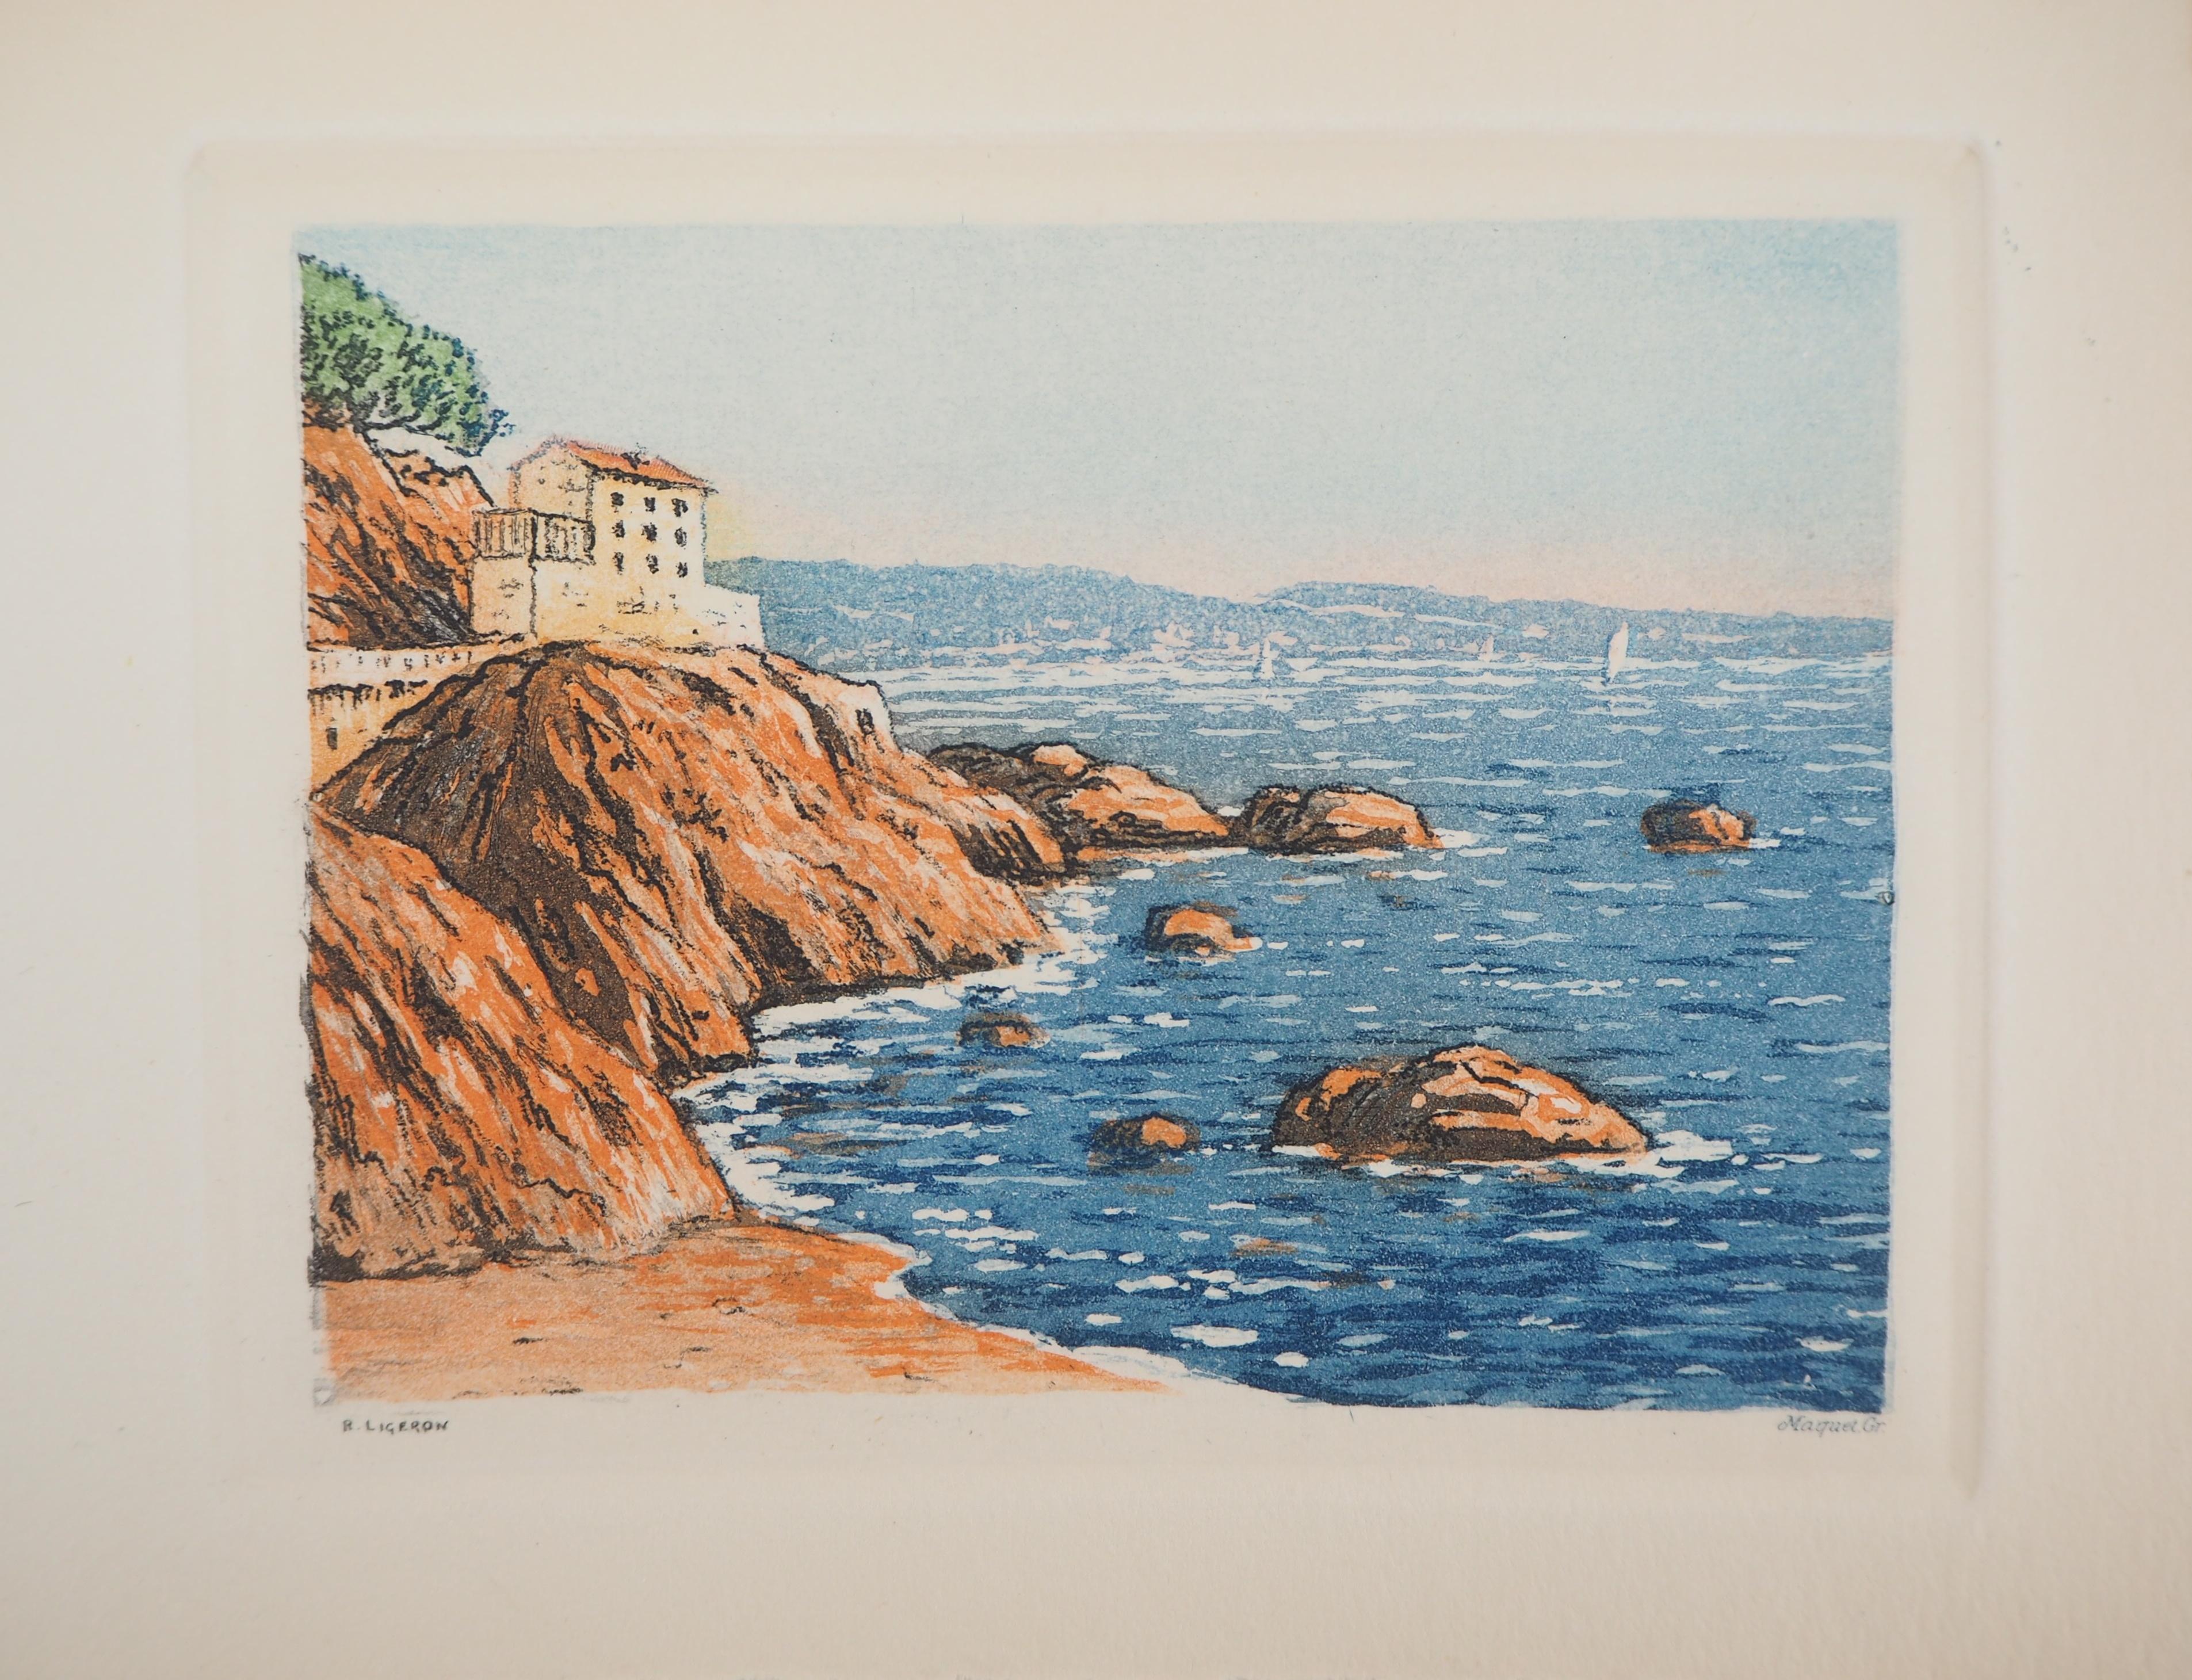 René Ligeron Landscape Print - Mediterranean Sea : The house Near the Beach - Original etching